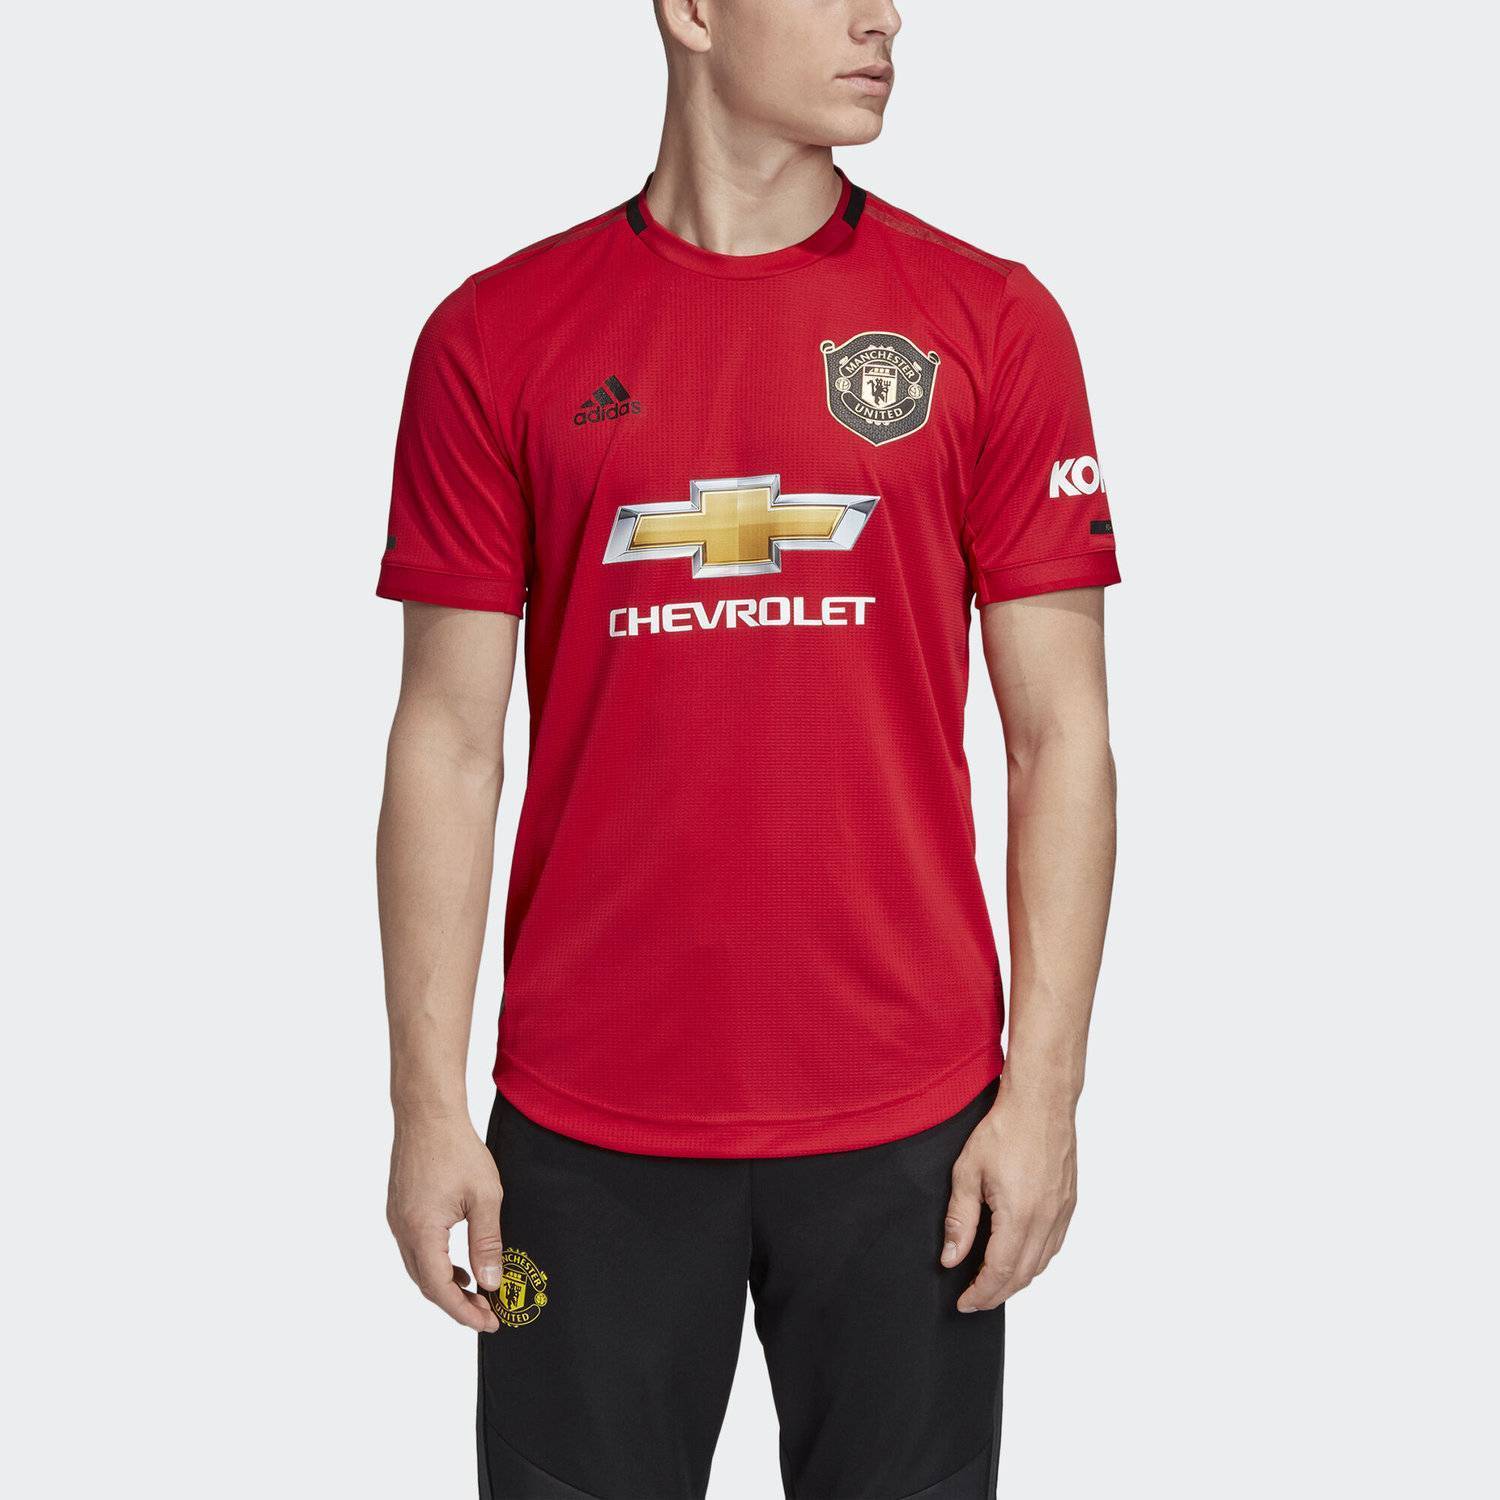 Купить футболку манчестер. Футболка Manchester United 2019. Форма Манчестер Юнайтед adidas 19/20.